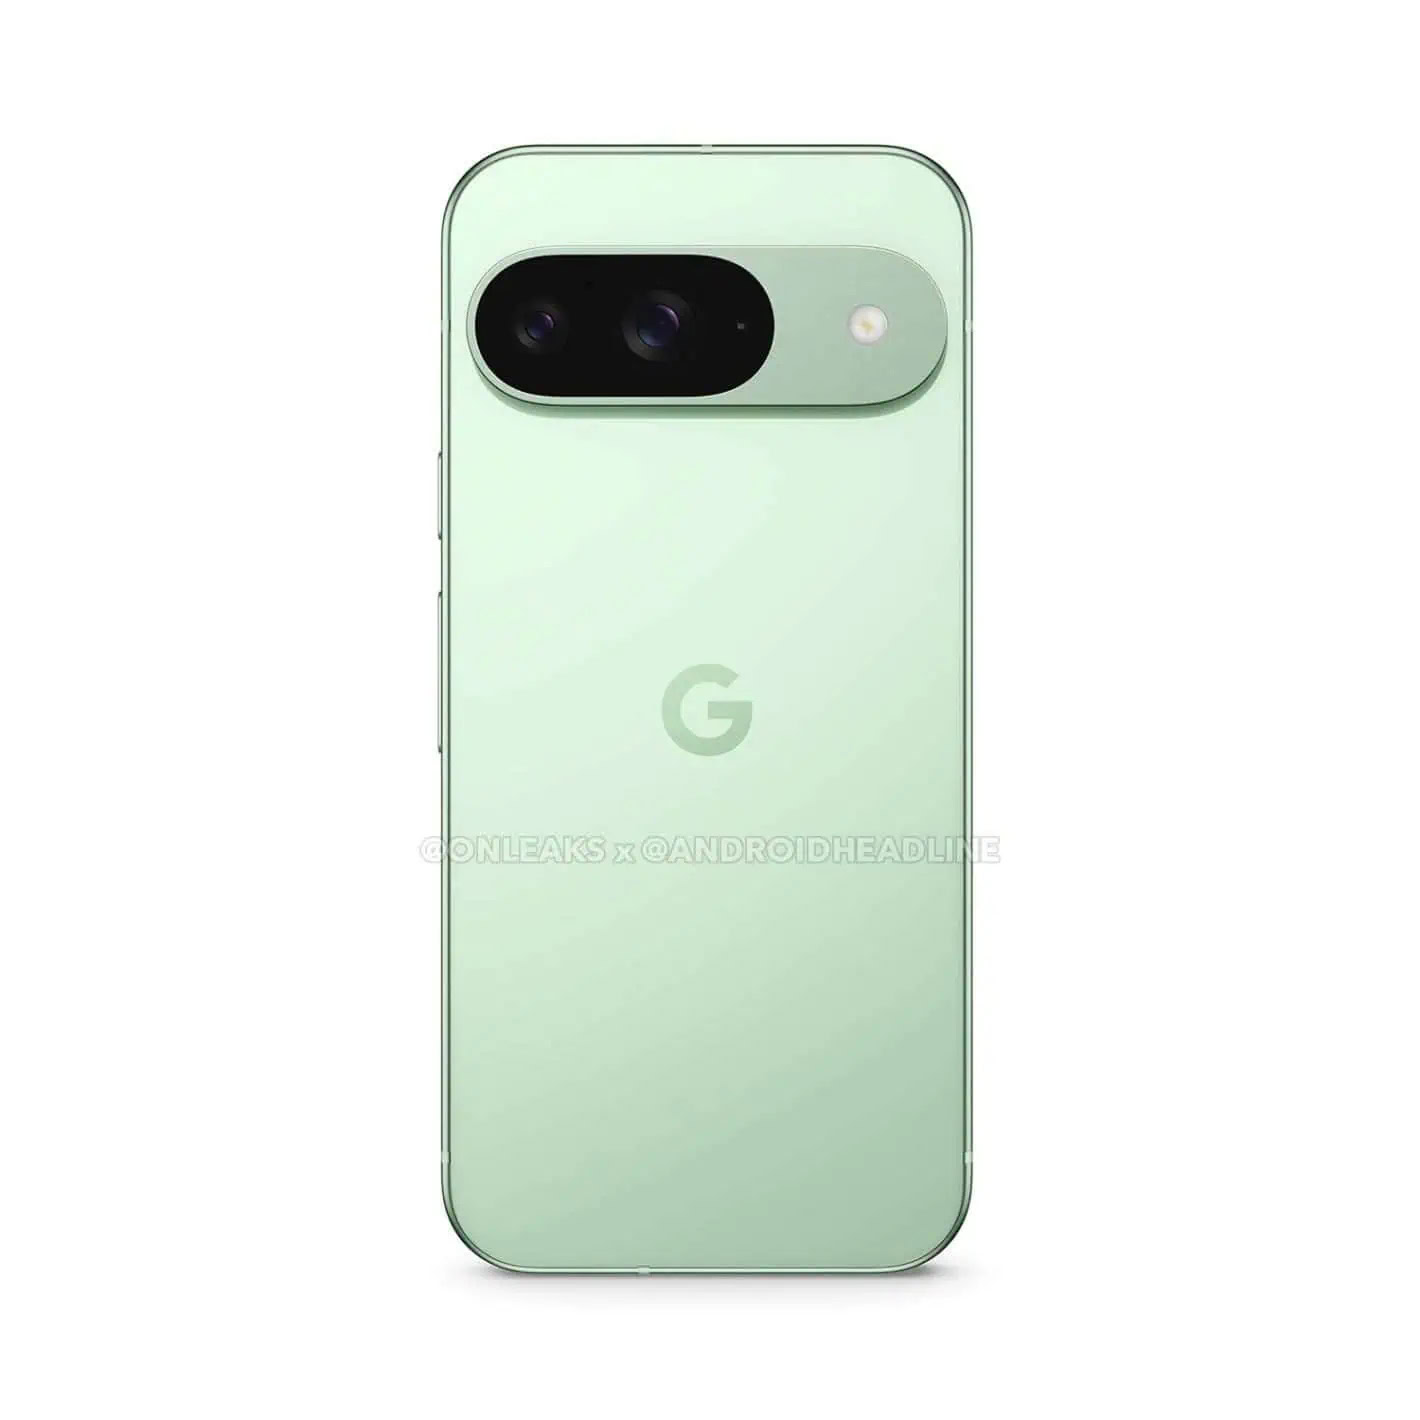 Pixel 9 Green 2 Leaked image